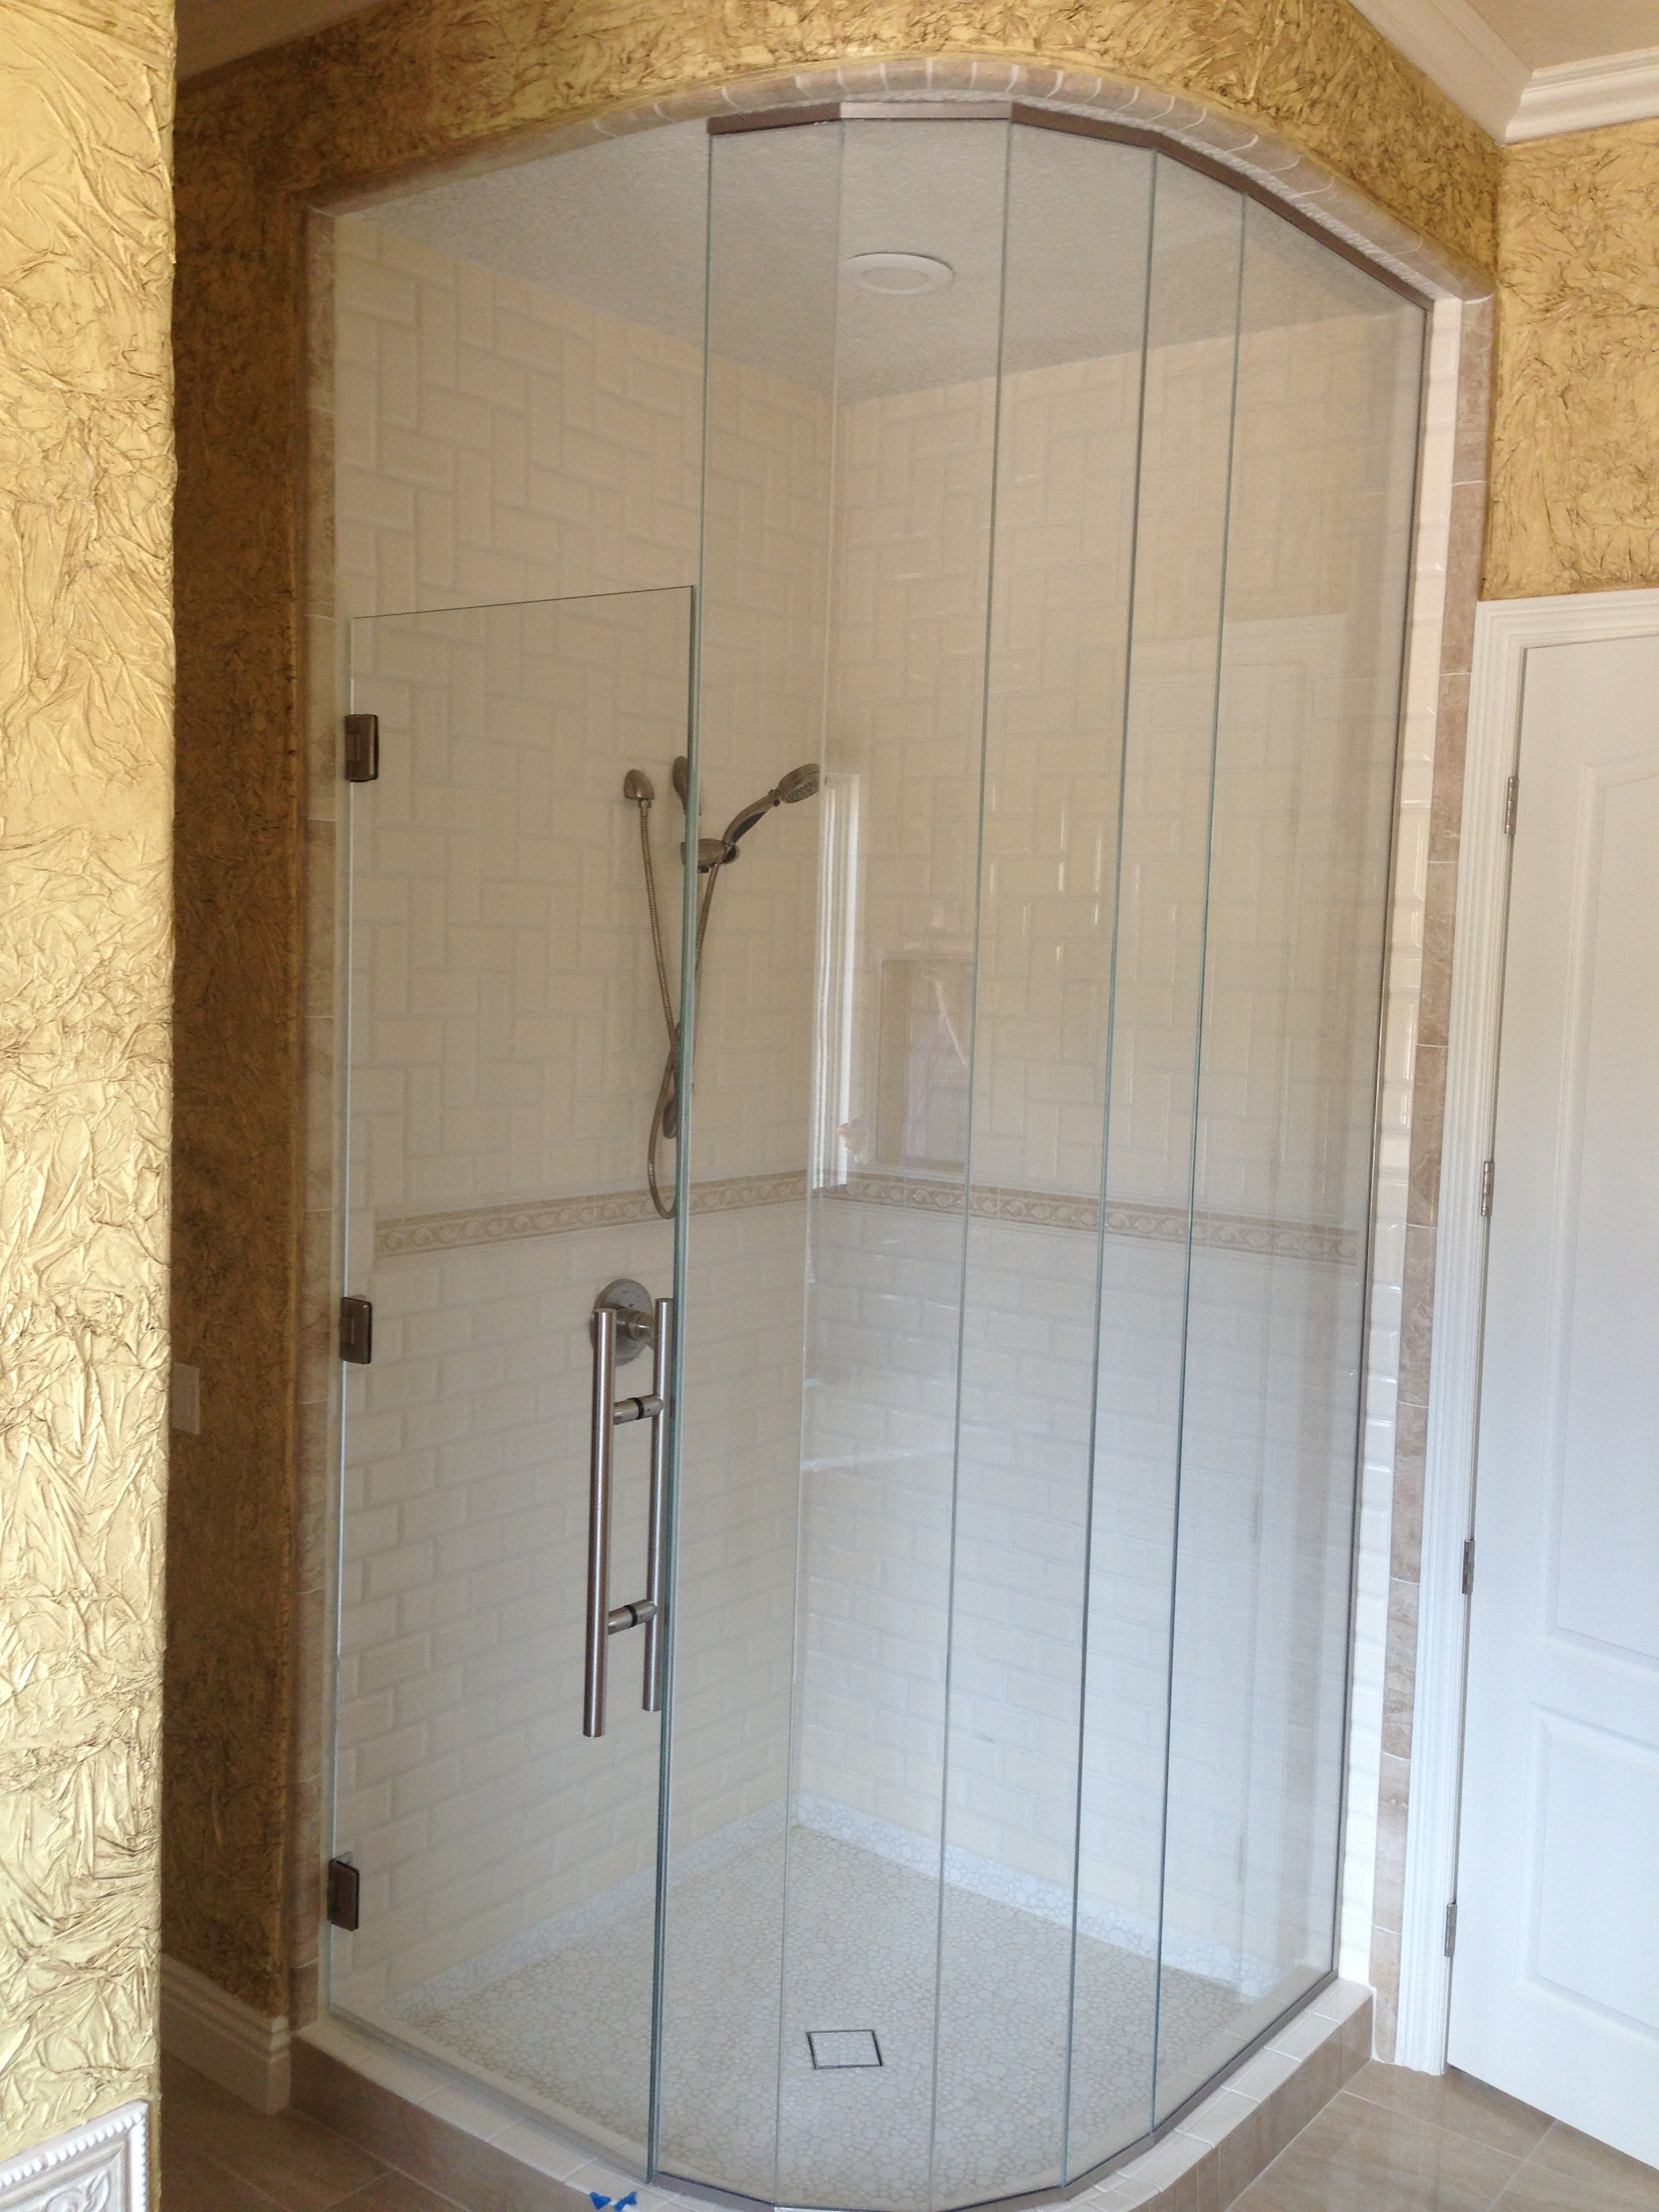 Lexan Shower Doors Medium Size Of Showerfolding Shower Doors intended for dimensions 2448 X 3264